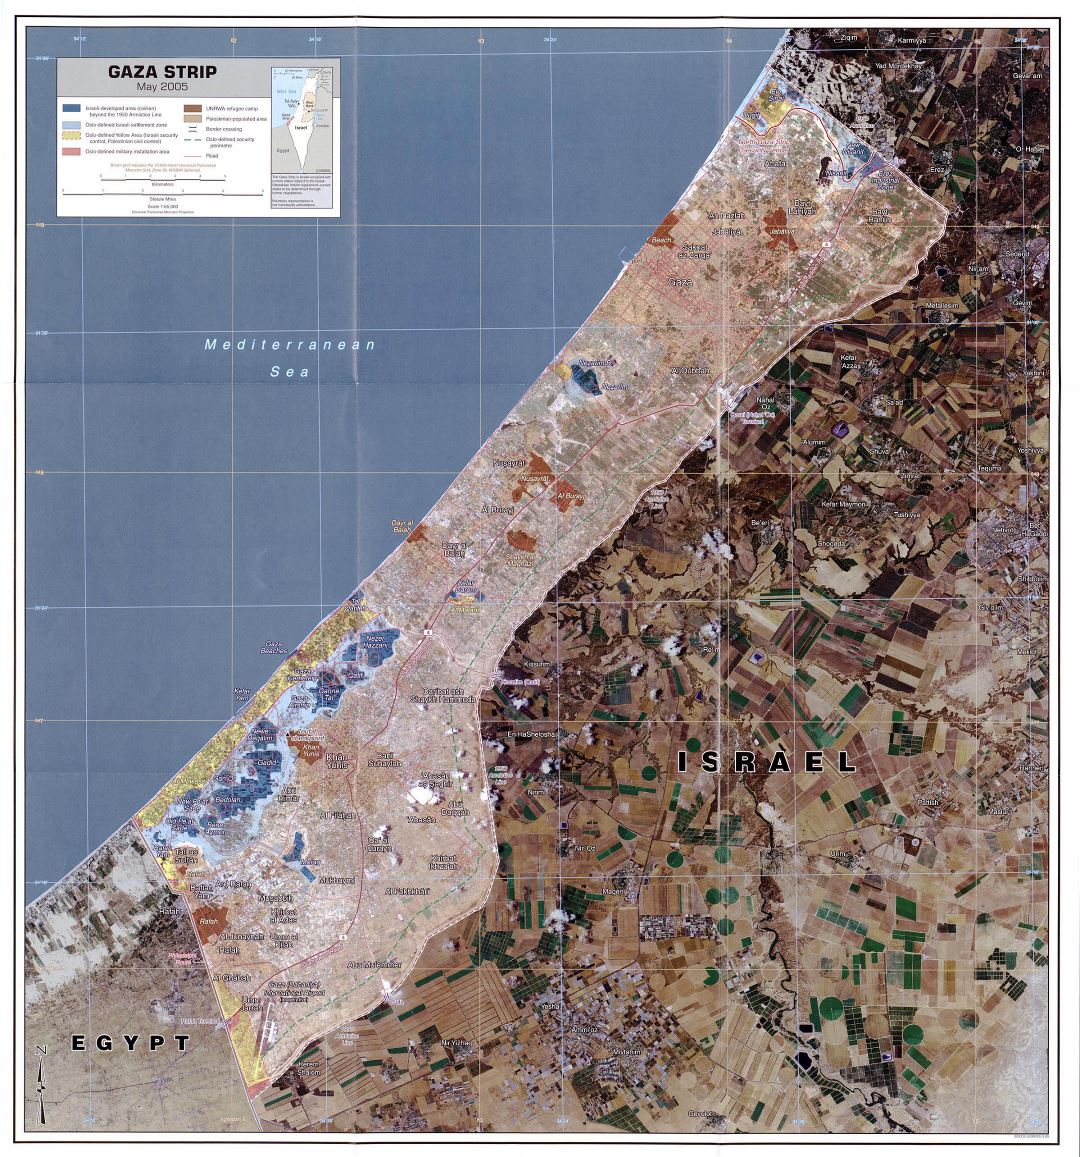 Grande detallado mapa satelital de la Franja de Gaza con otras marcas - 2005